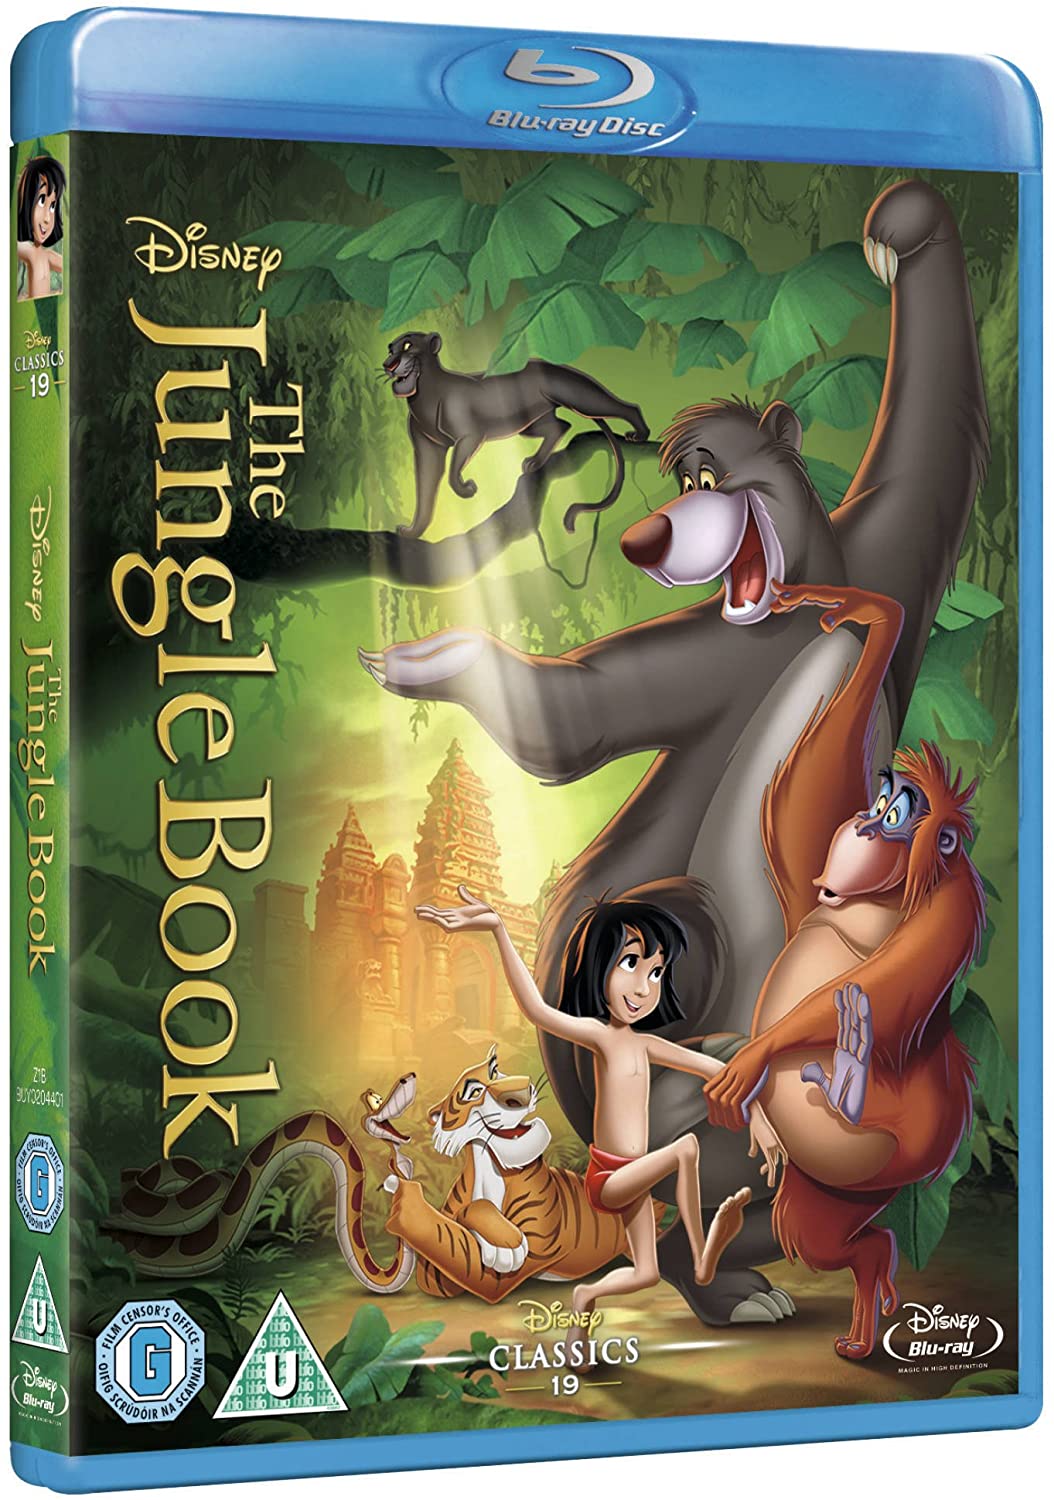 The Jungle Book [Blu-ray] [1967] [Region B & C]